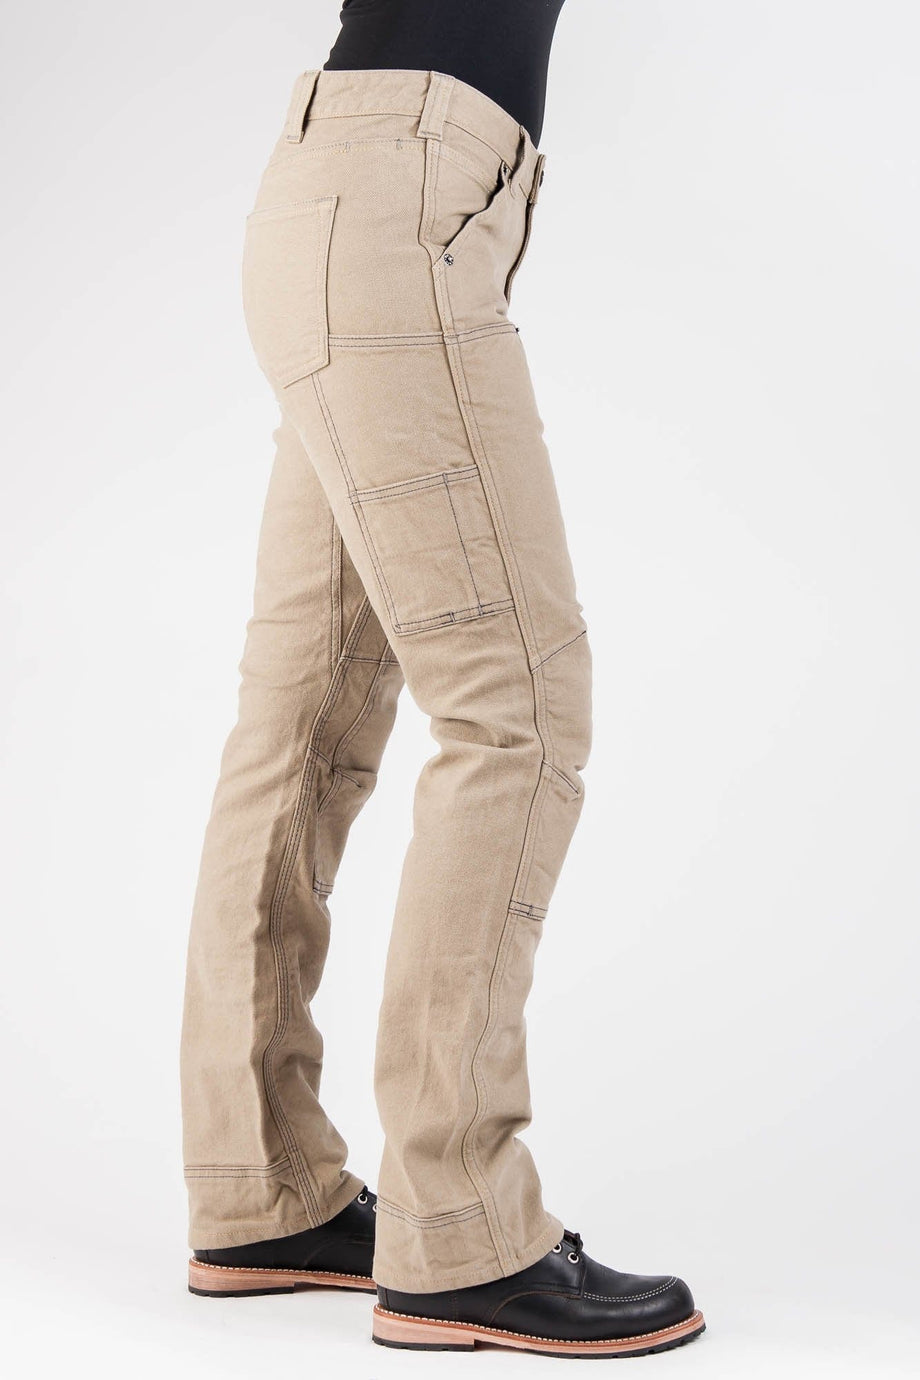 Dovetail Workwear Britt Utility Pant - Women's